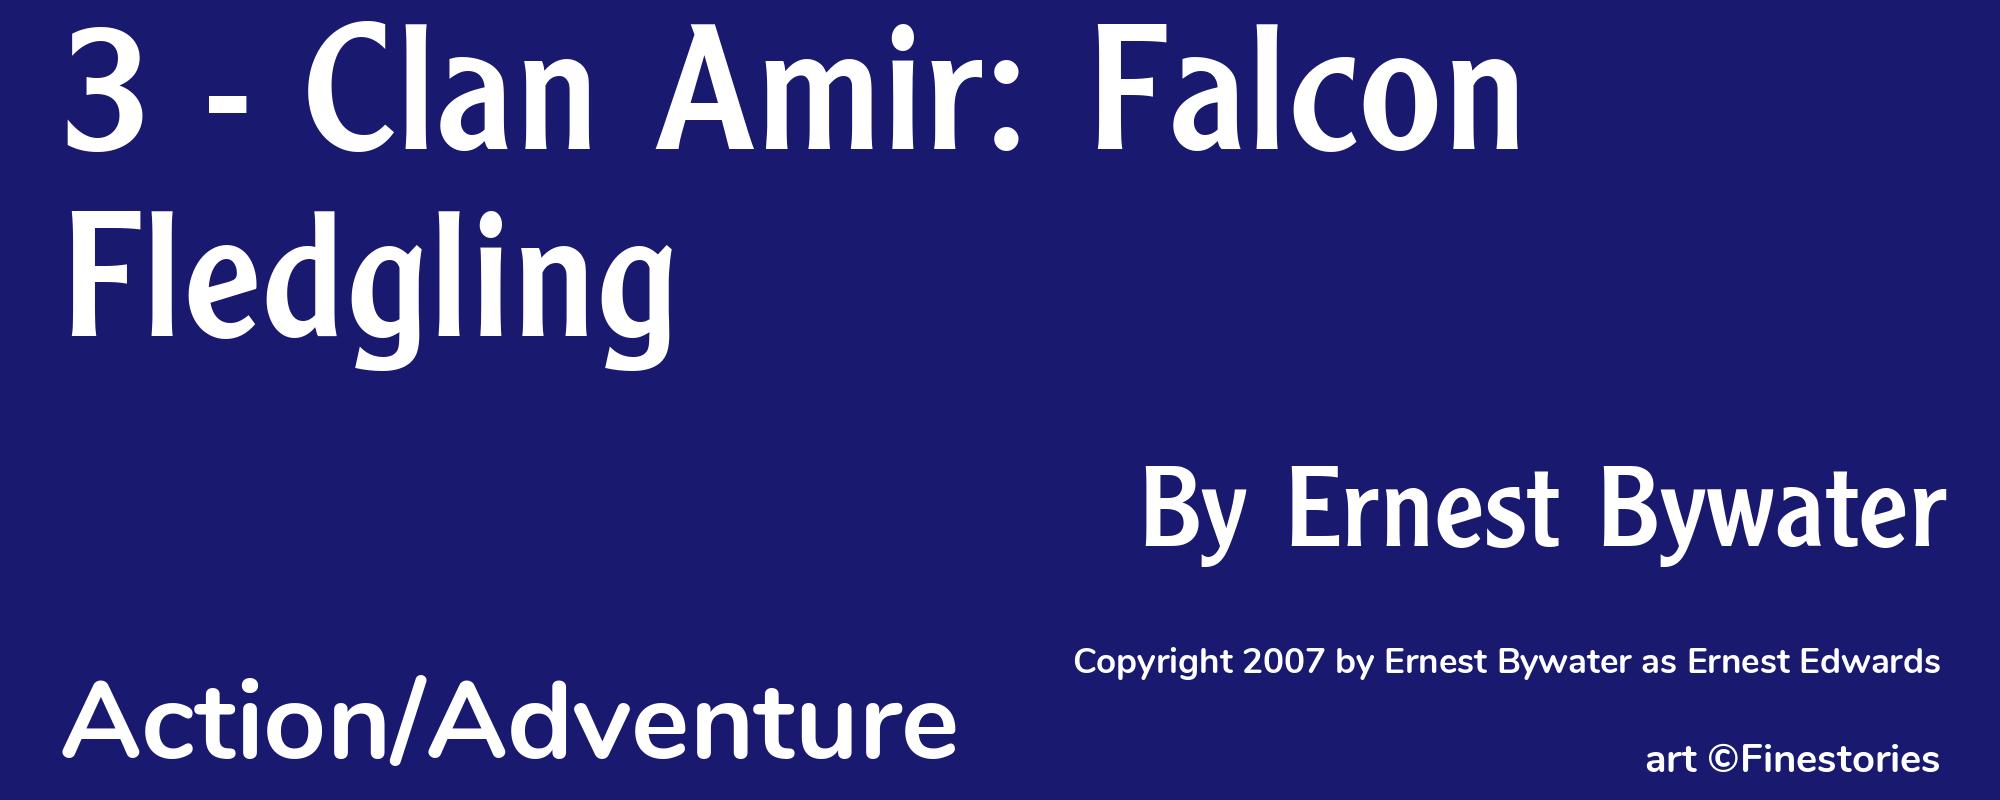 3 - Clan Amir: Falcon Fledgling - Cover